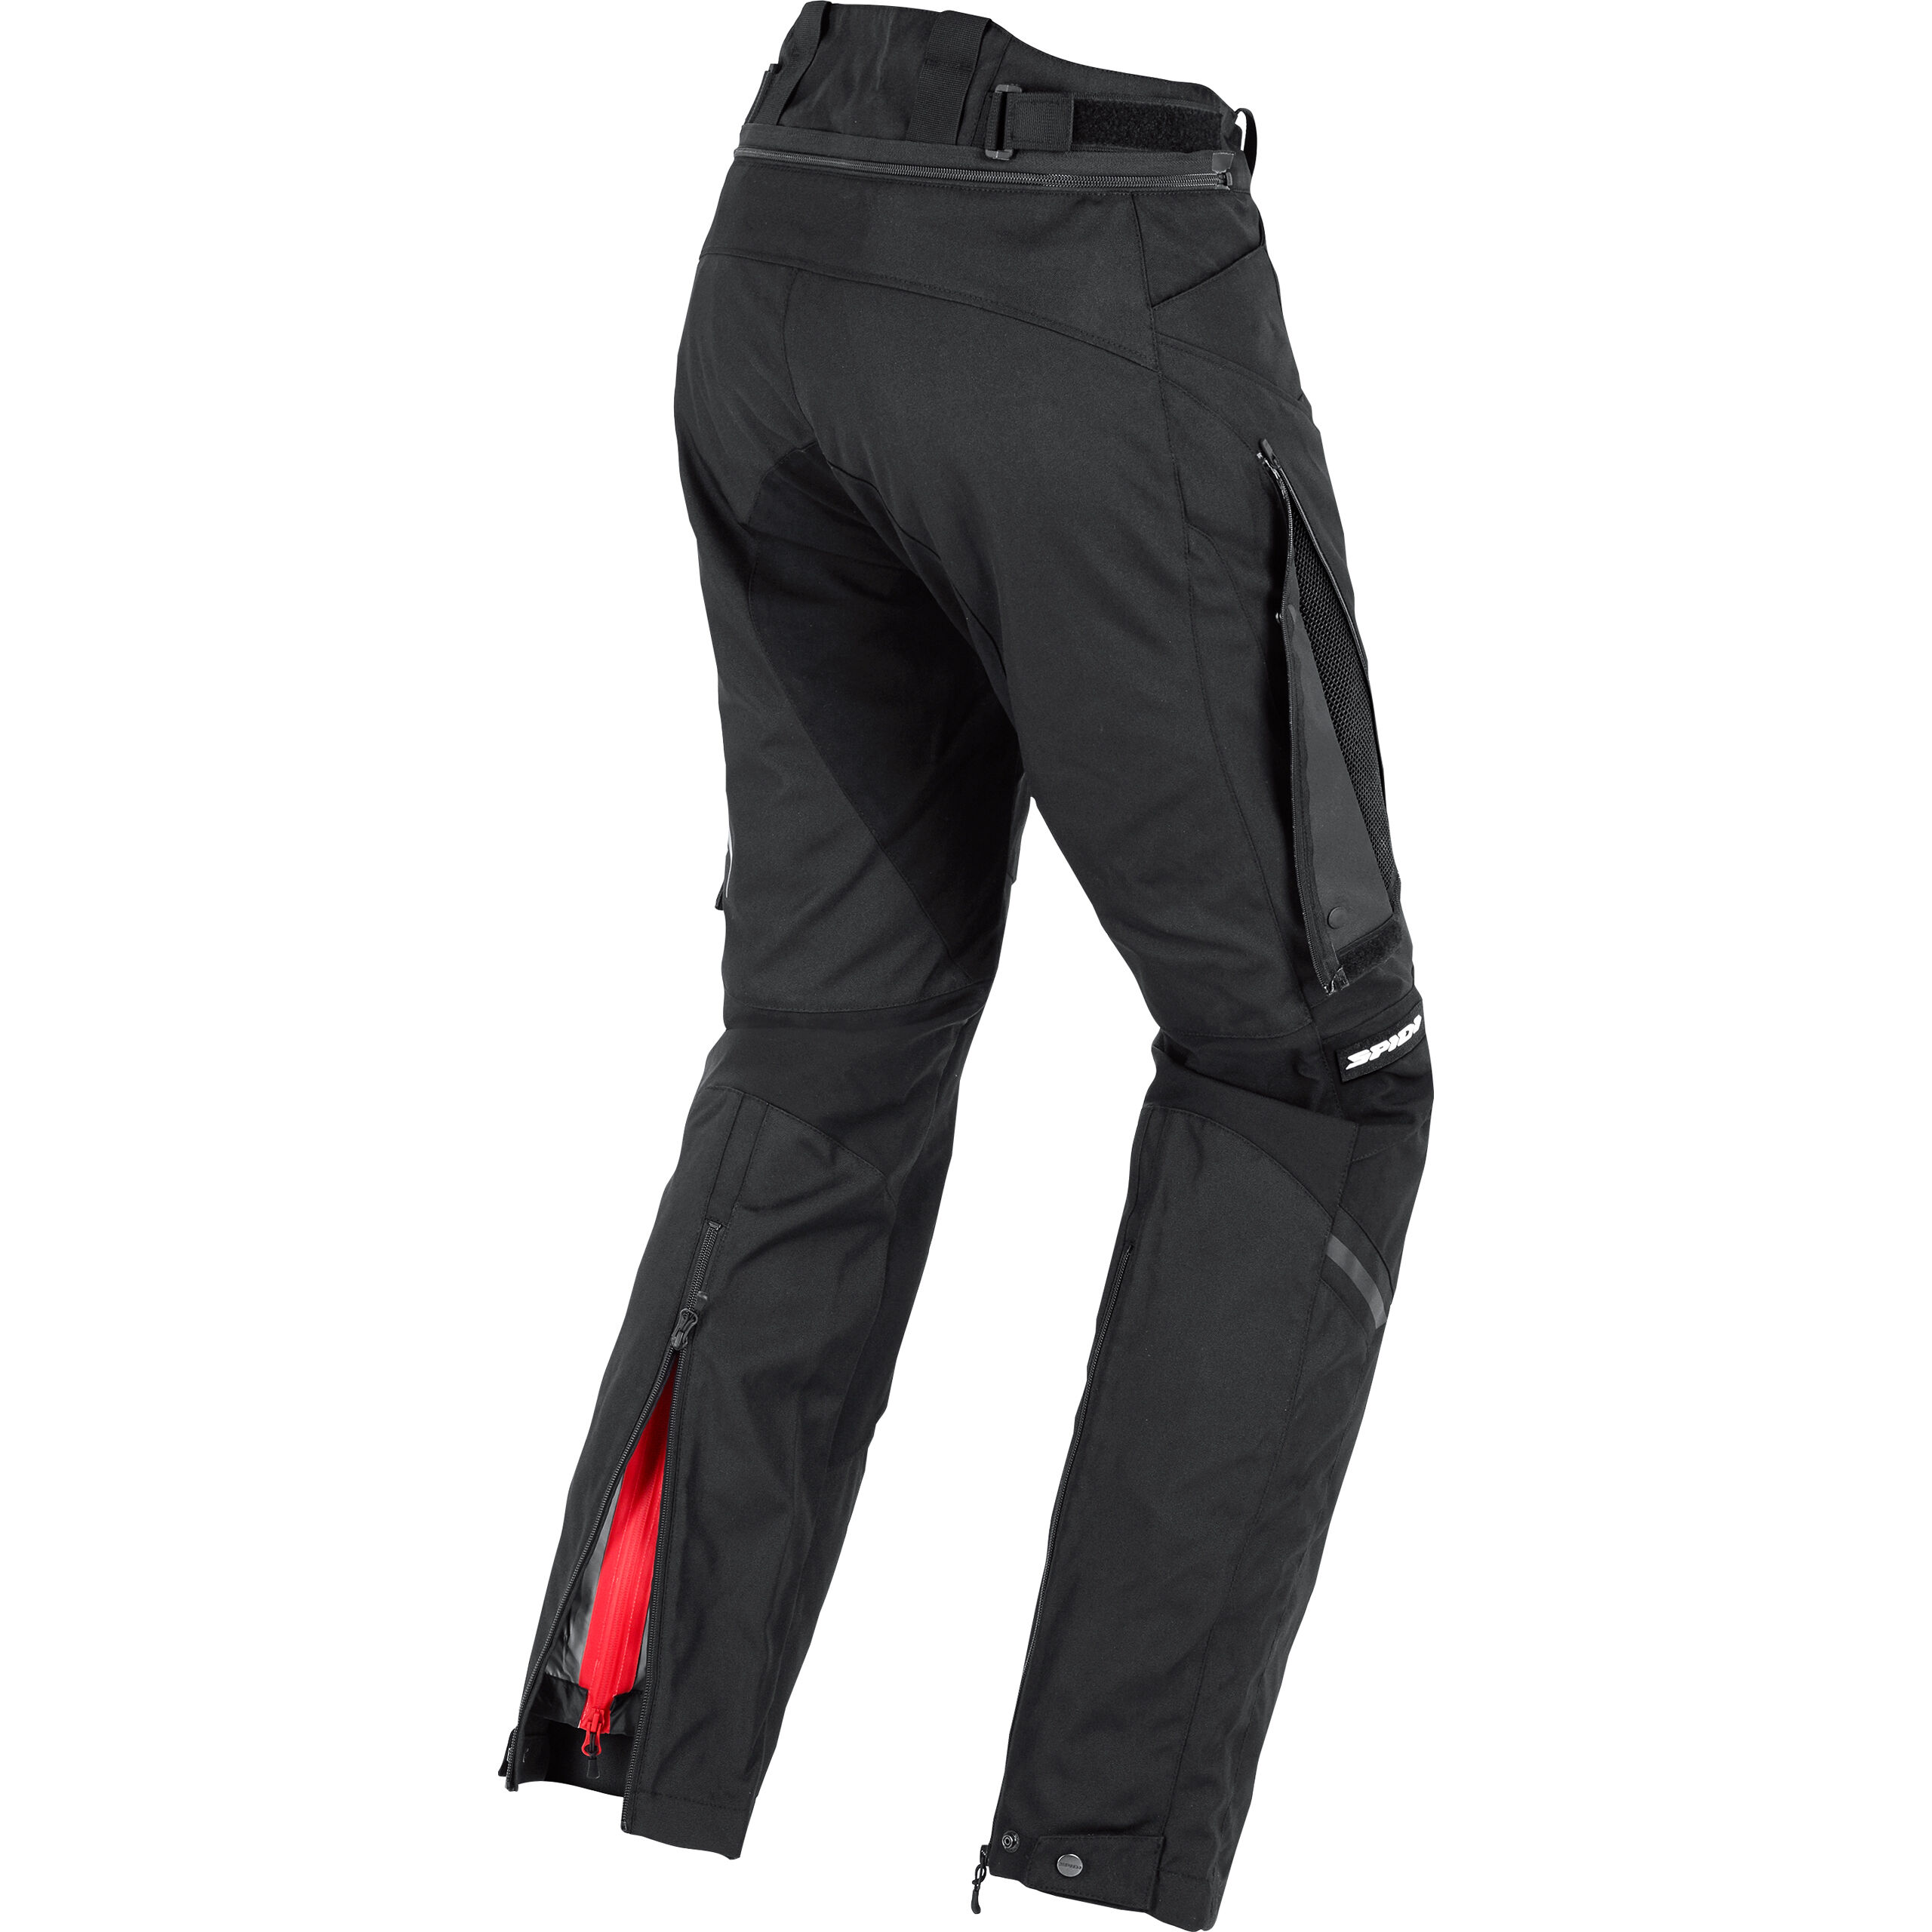 Dainese New Drake Air Textile Pants Review | Triumph Motorcycle Forum -  TriumphTalk